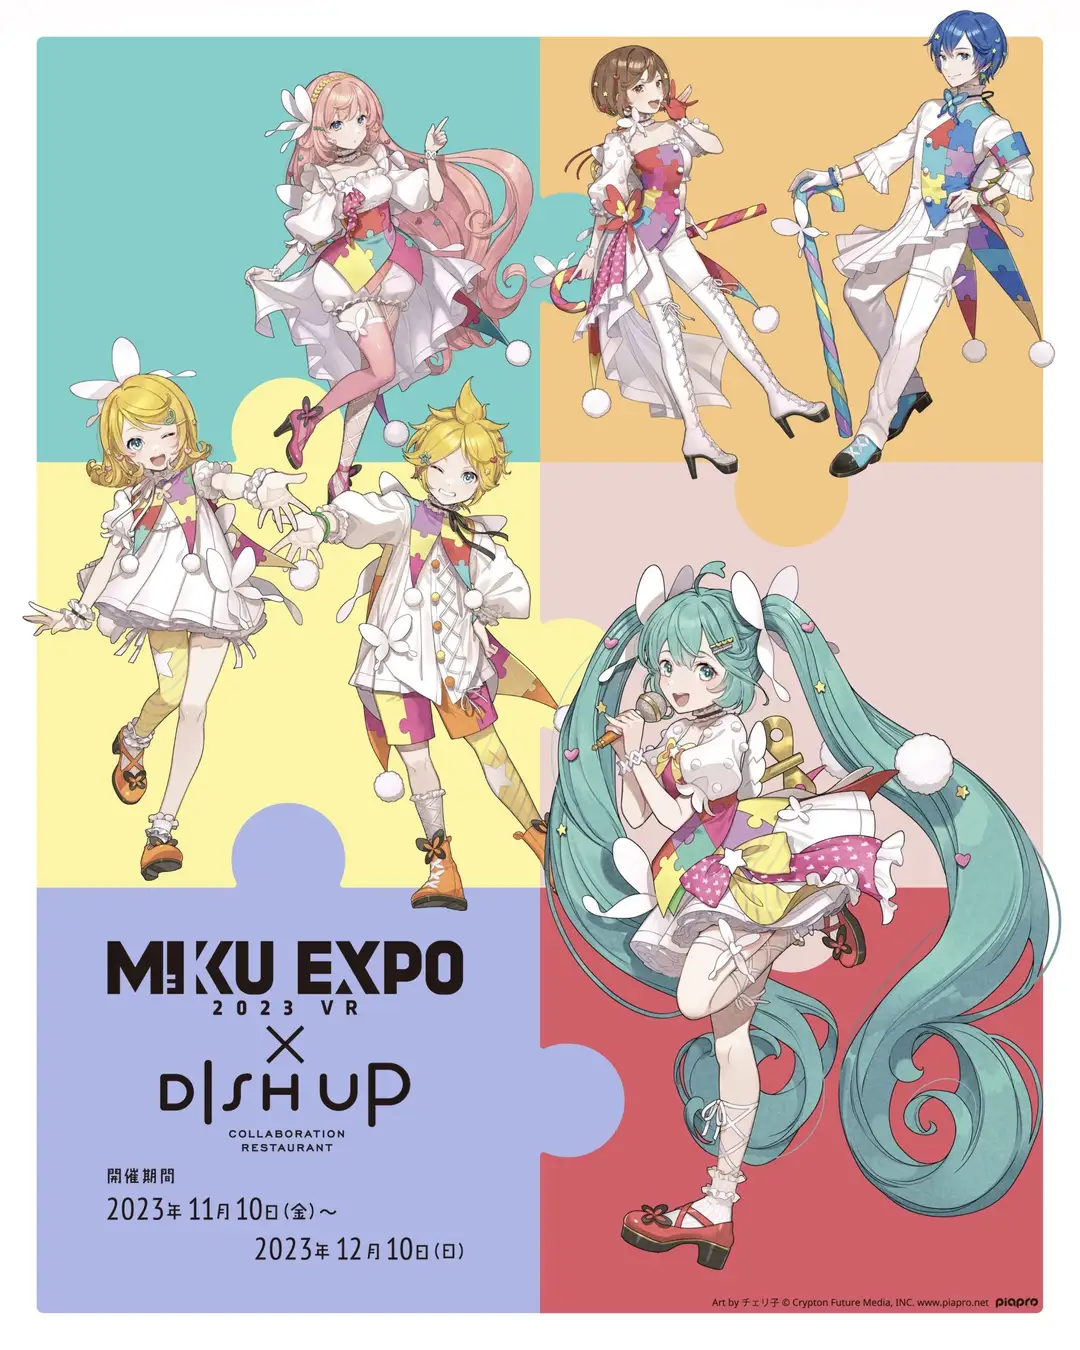 Miku expo. Miku Expo 2023. Мику Экспо 2017. Мику Экспо 2012.